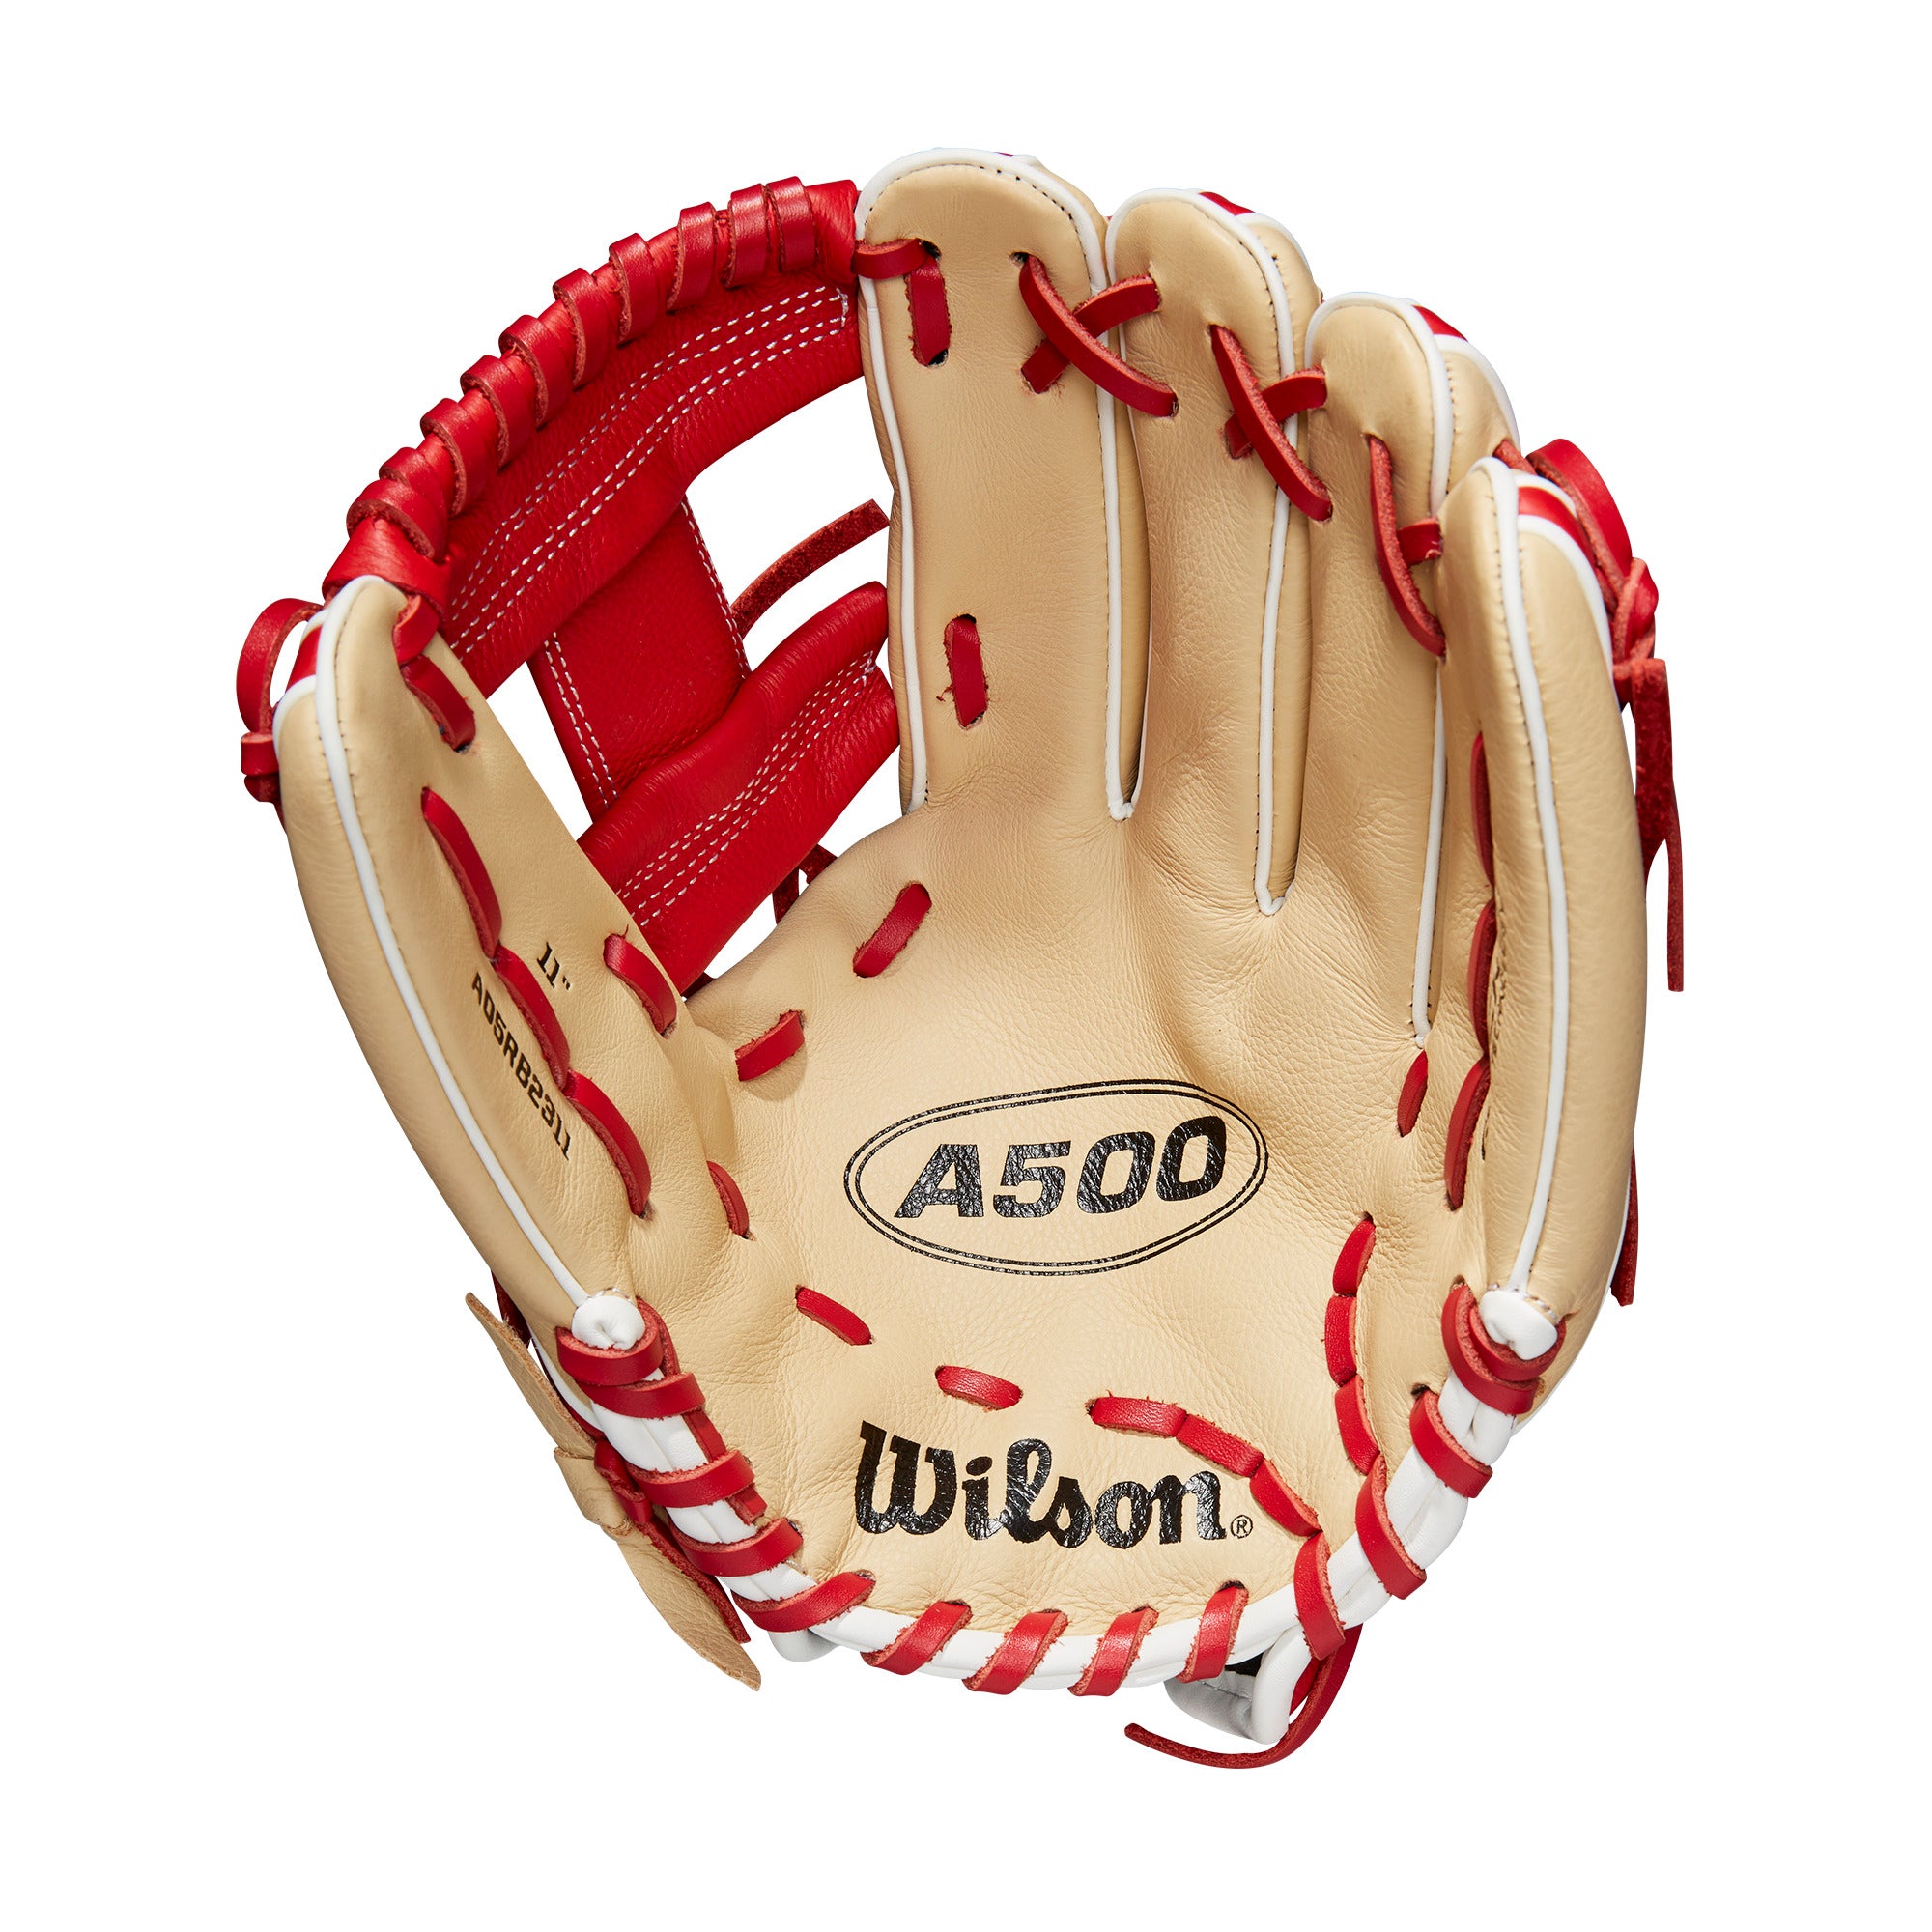 Wilson A500 11-inch LHT Utility Youth Baseball Glove